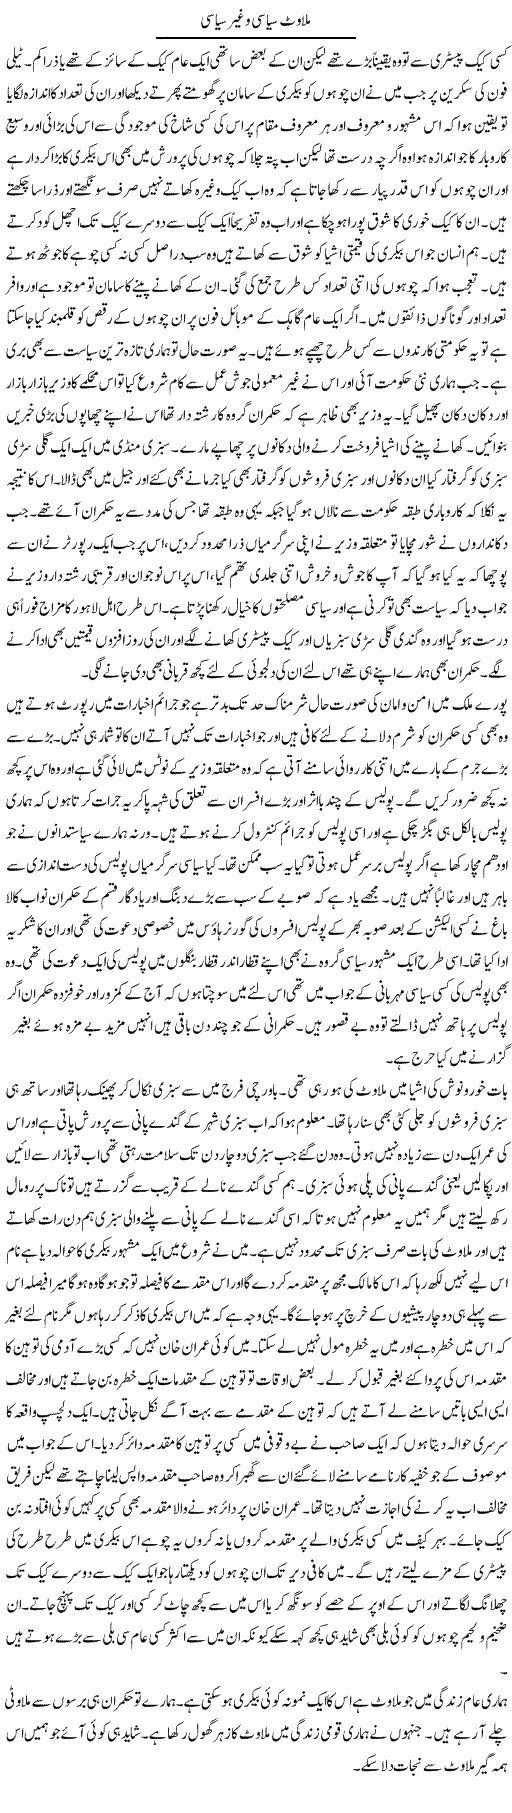 Milawat Siasi O Ghair Siasi | Abdul Qadir Hassan | Daily Urdu Columns